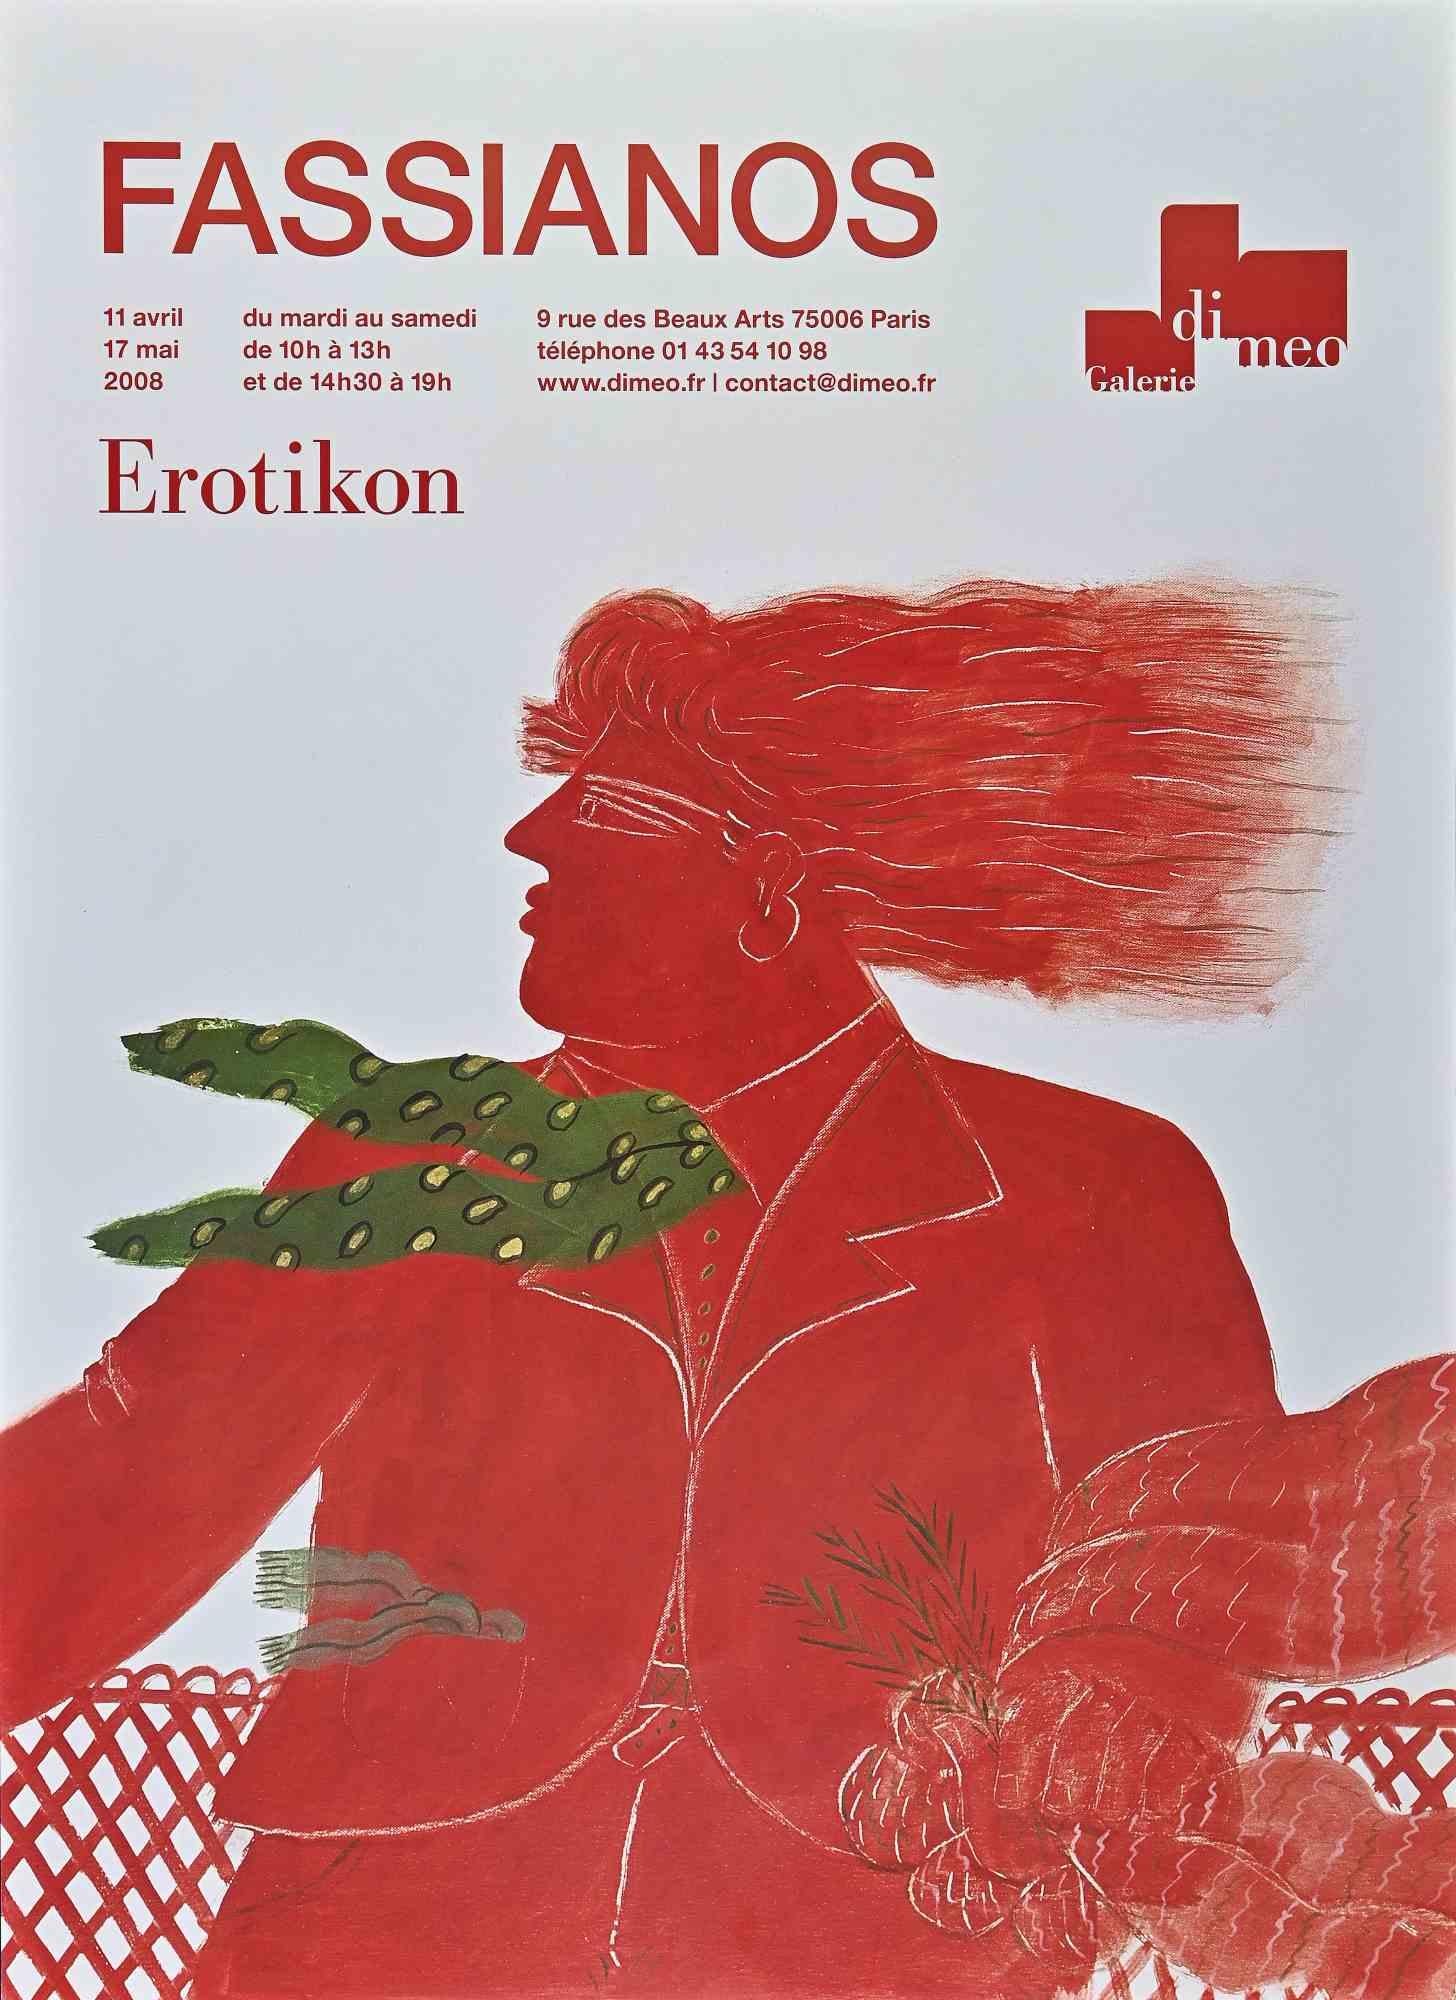  Fassianos, Erotikon - Exposition Galerie Di Meo - 2008